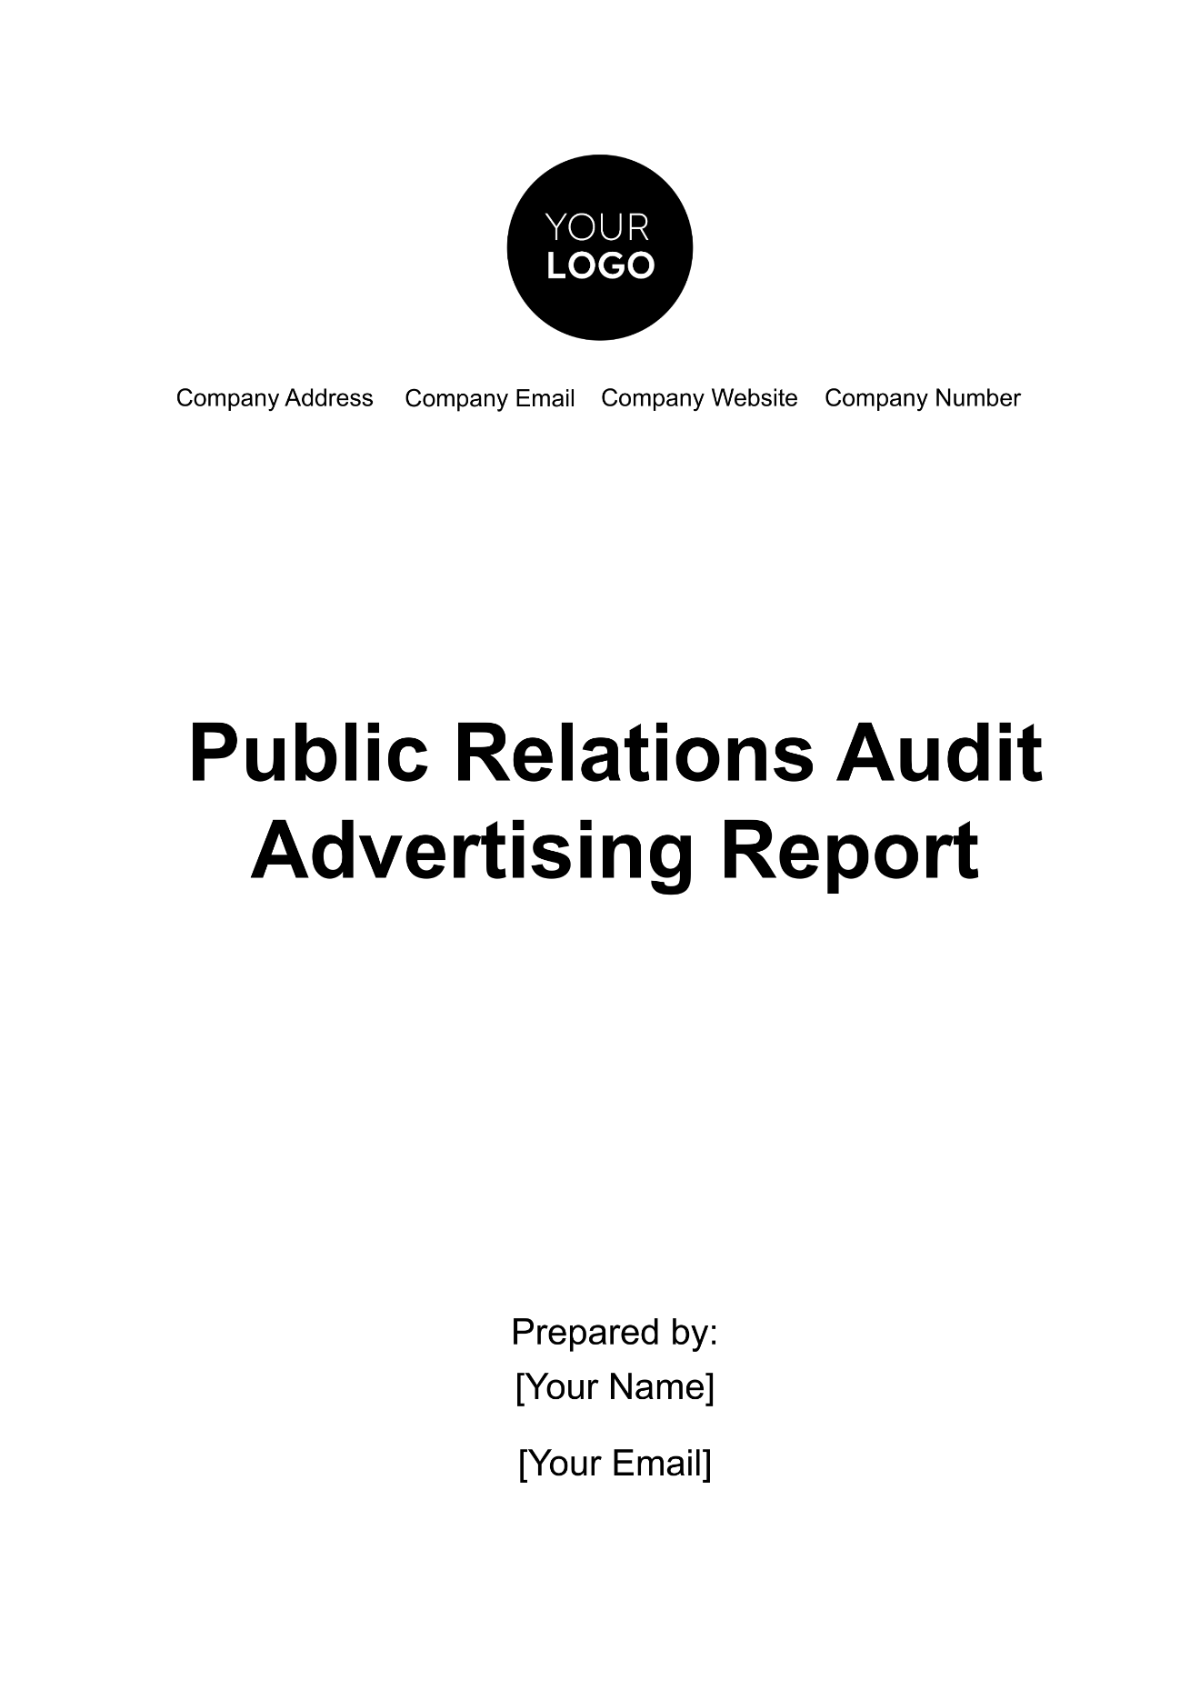 Public Relations Audit Advertising Report Template